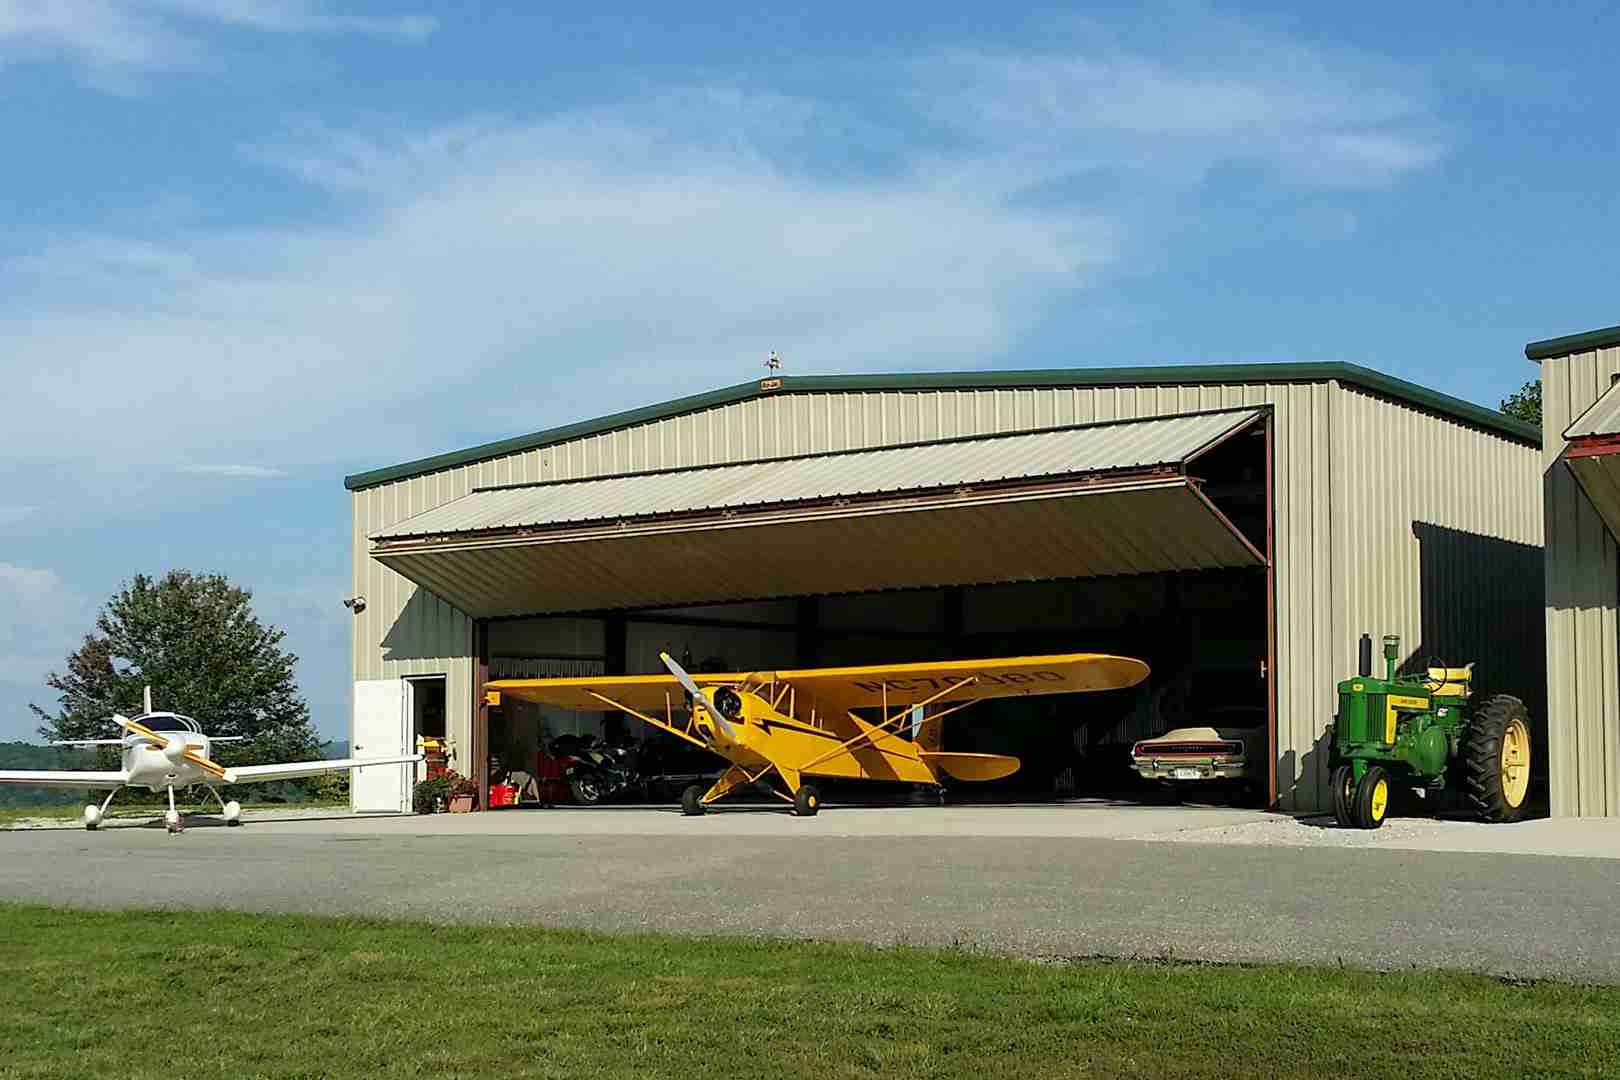 planes and tractor by hangar with bifold door